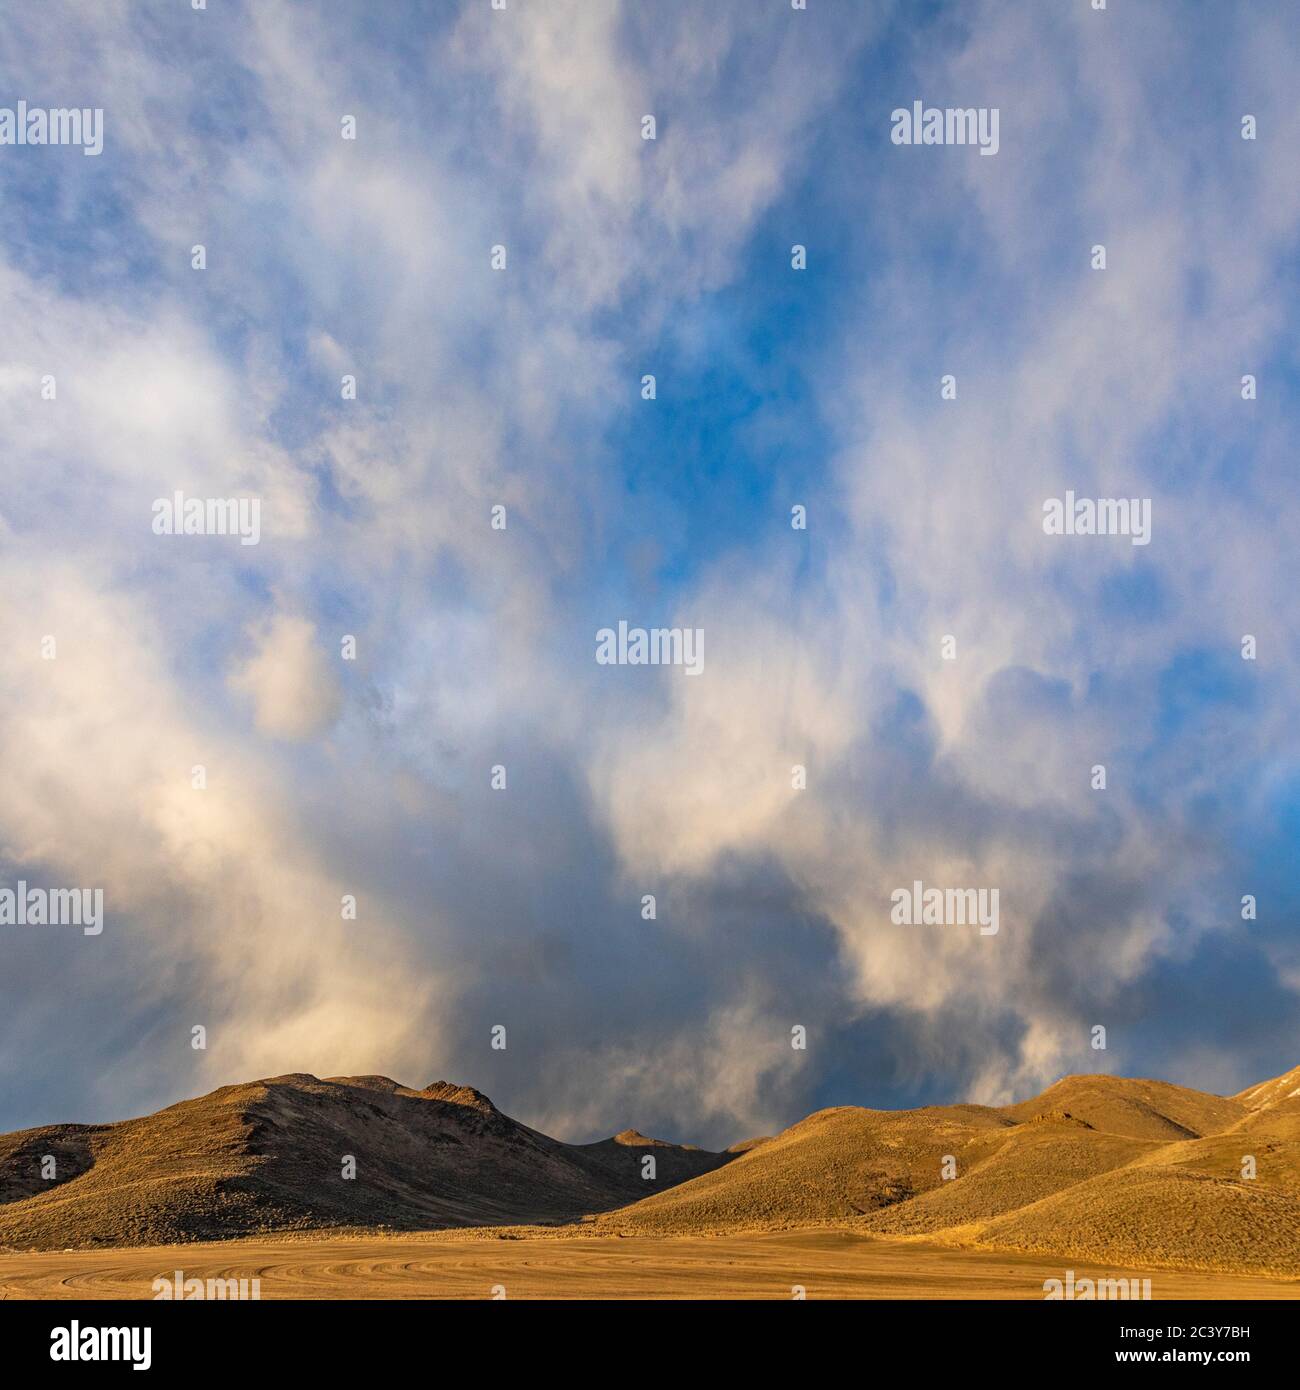 USA, Idaho, Picabo, Dramatic sky over mountain range Stock Photo